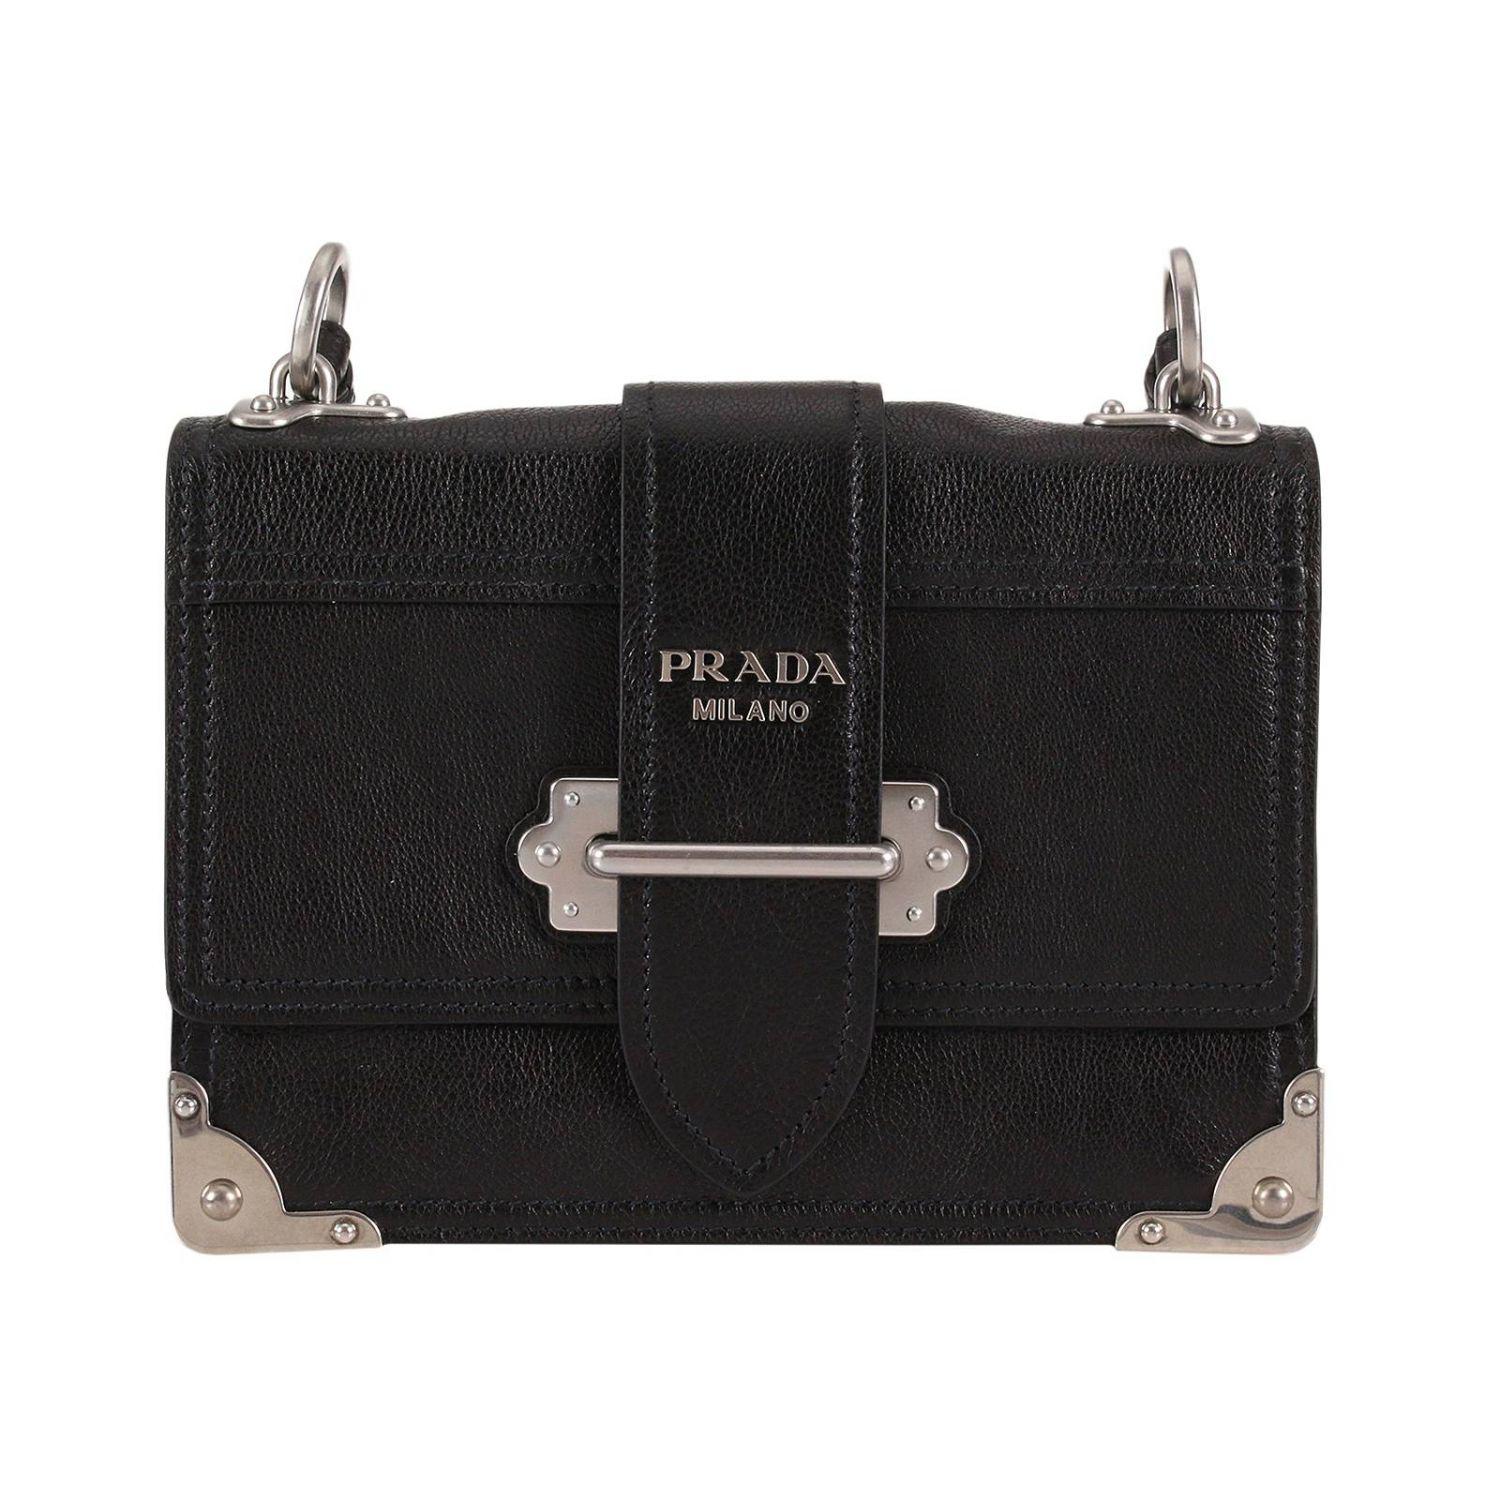 Prada Leather Mini Bag Shoulder Bag Women in Black - Lyst